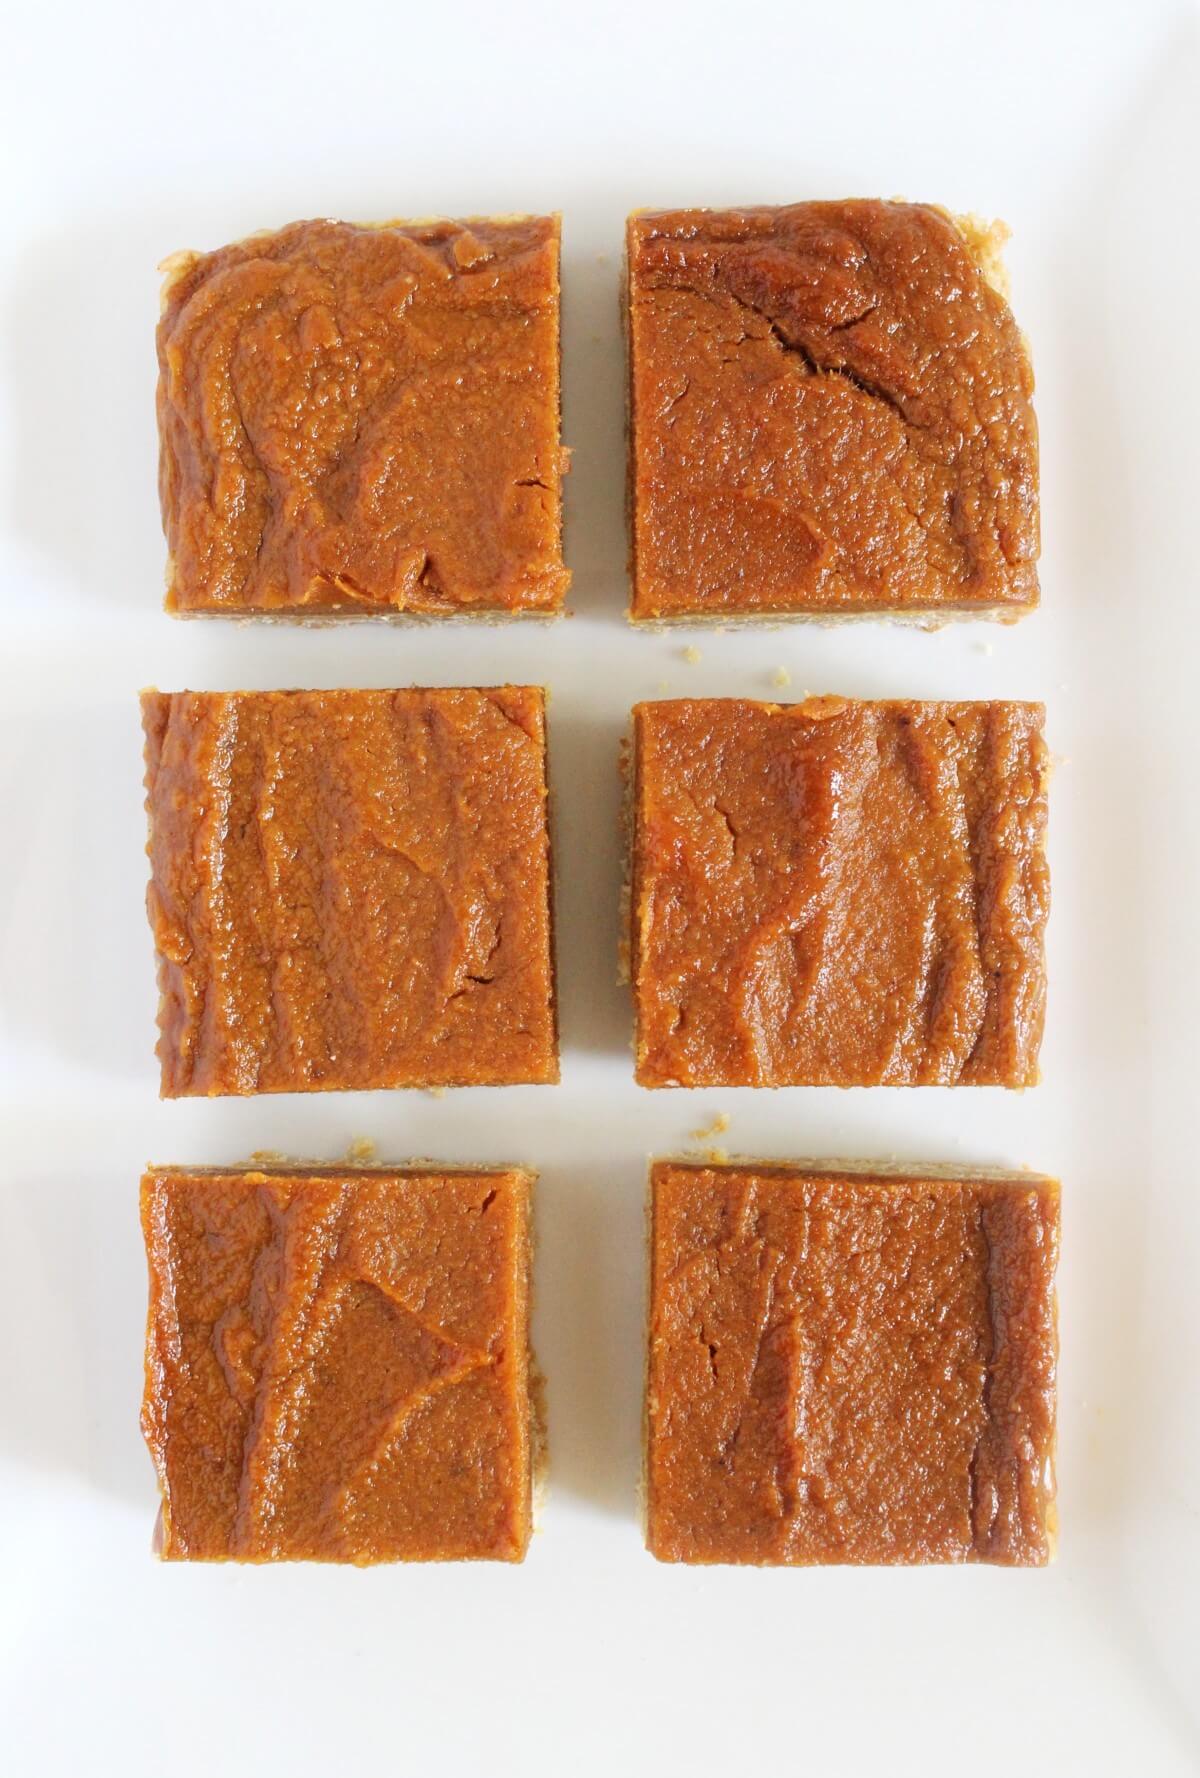 6 cut squares of pumpkin pie bars.